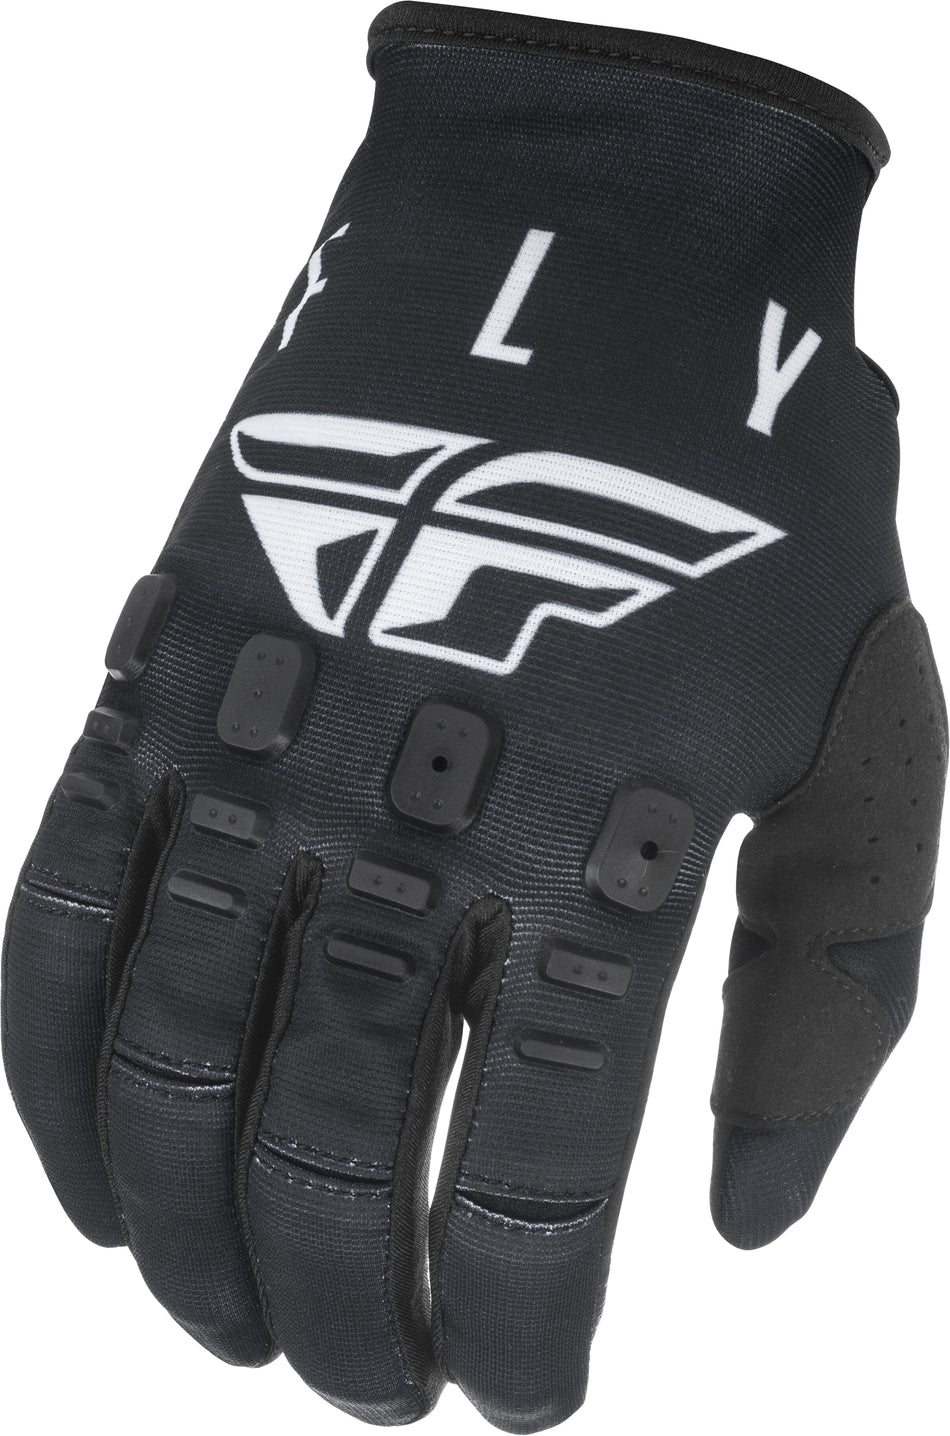 FLY RACING Kinetic K121 Gloves Black/White Sz 13 374-41013